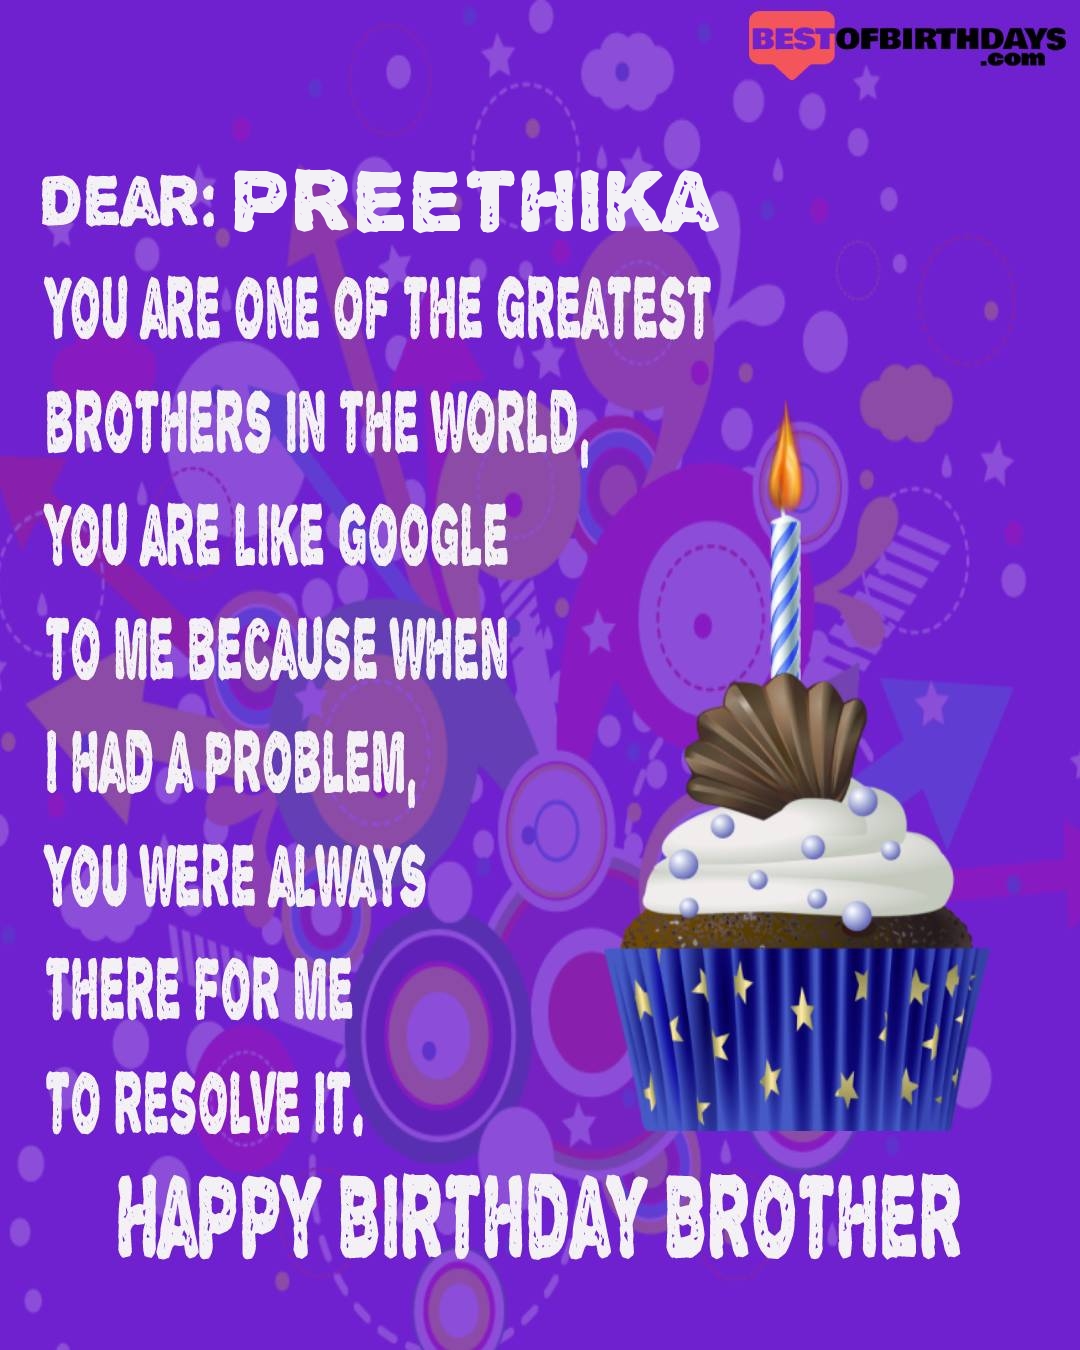 Happy birthday preethika bhai brother bro